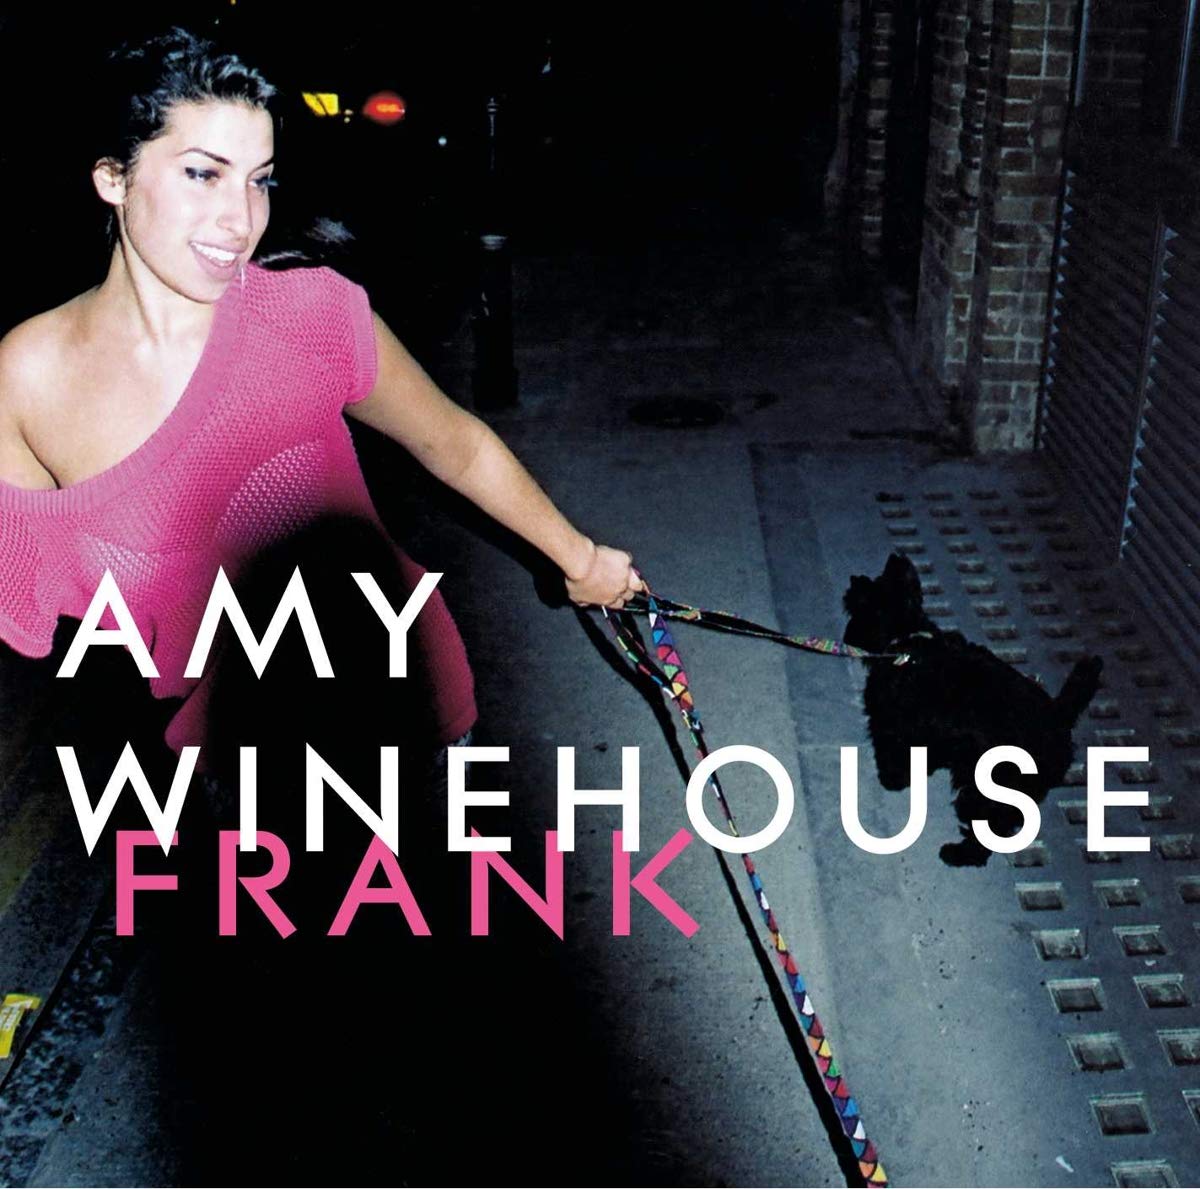 amy-winhouse-frank-lp